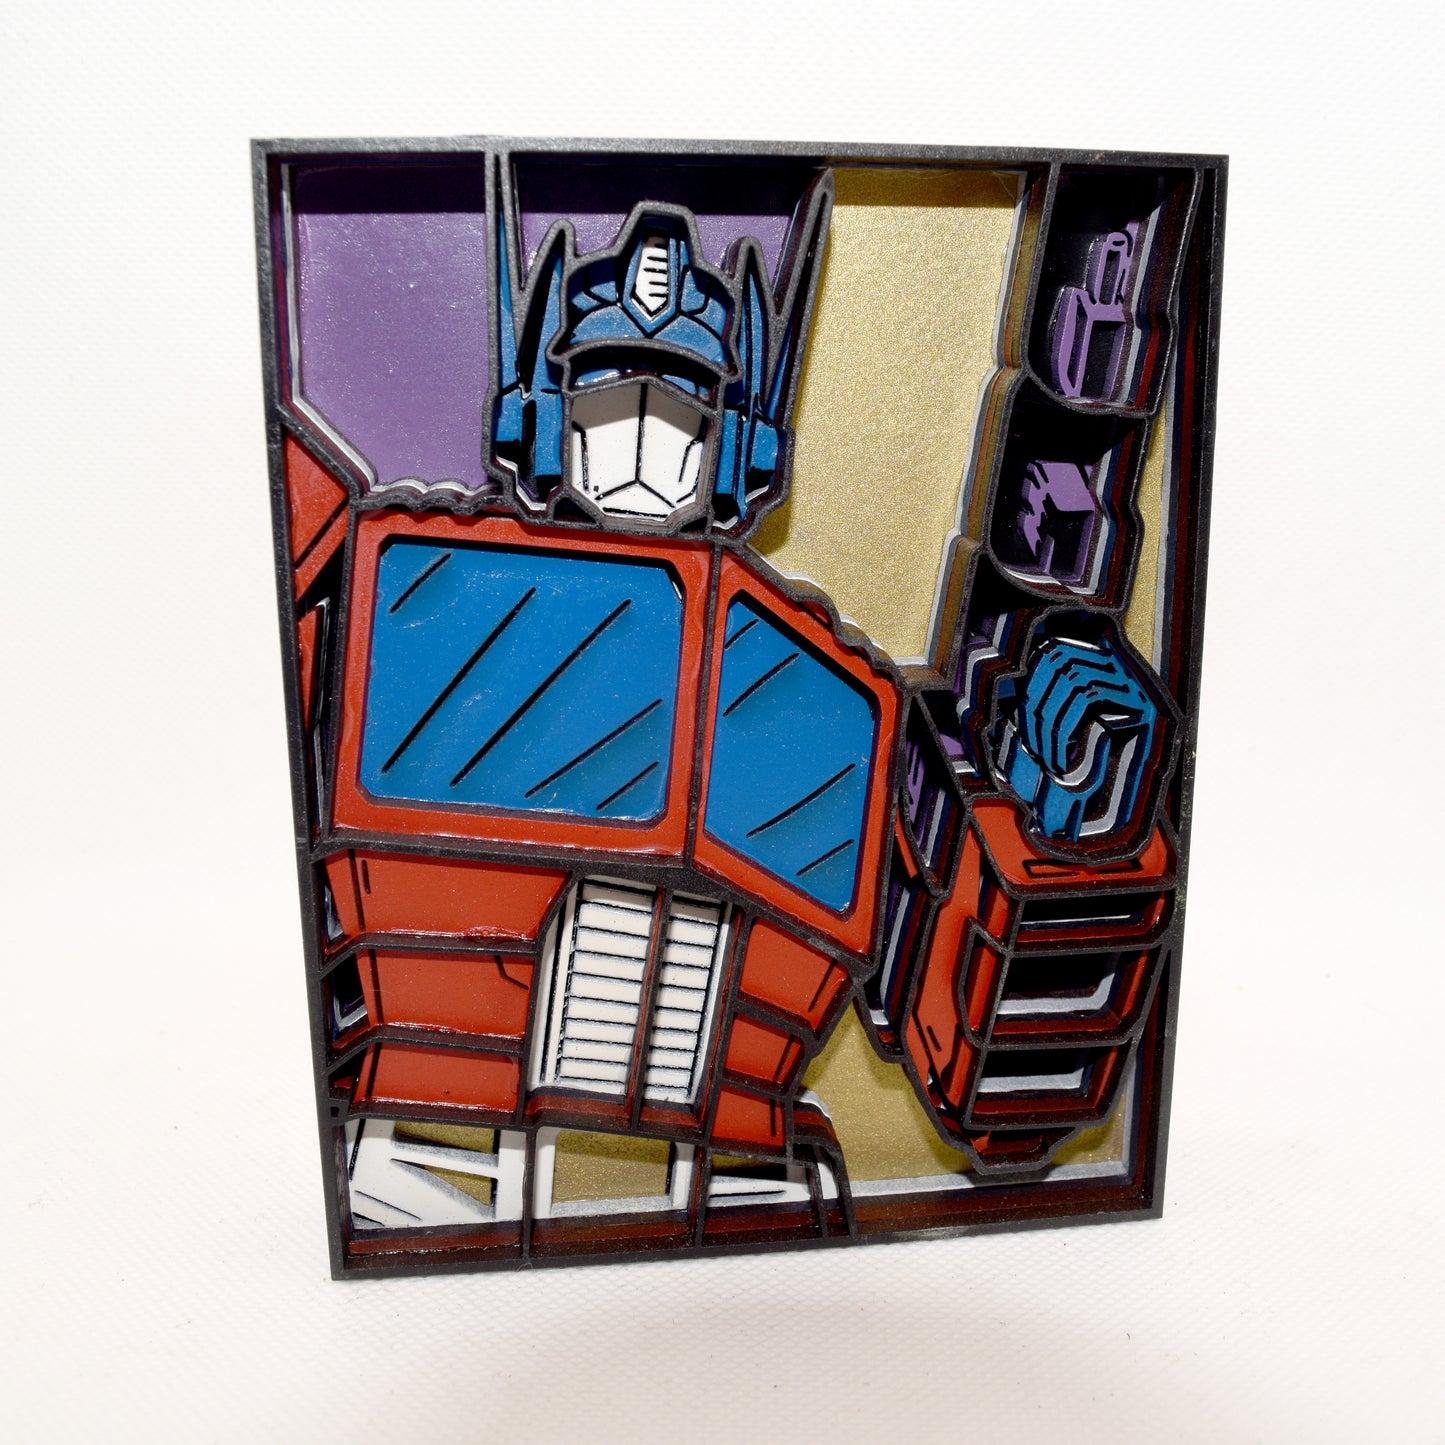 3-D Layered Optimus Prime (Transformers) Wooden Art